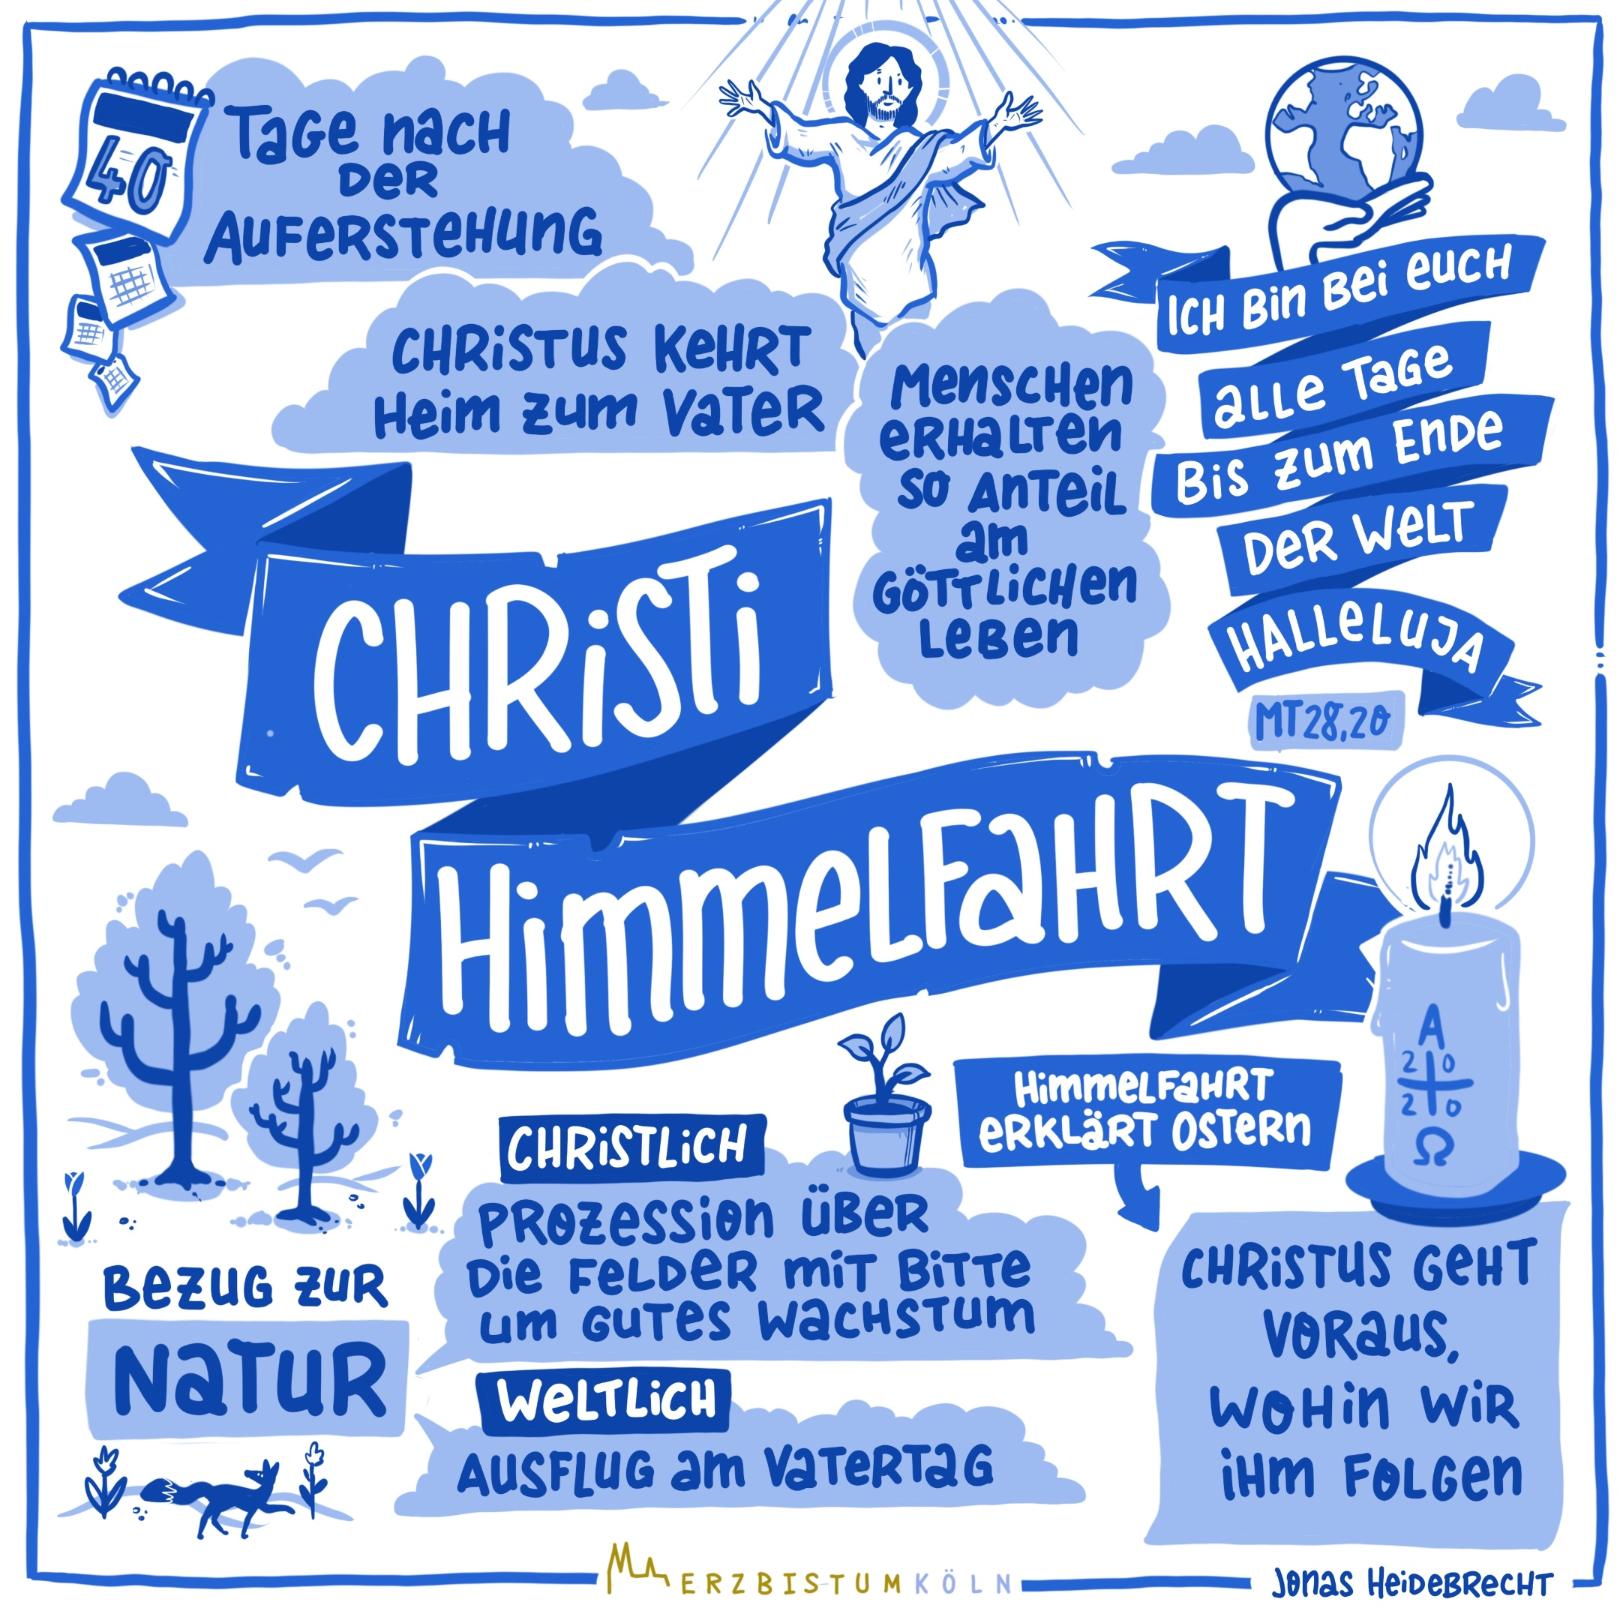 Sketchnote Christi Himmelfahrt (c) Bild: Erzbistum Köln / Jonas Heidebrecht In: Pfarrbriefservice.de